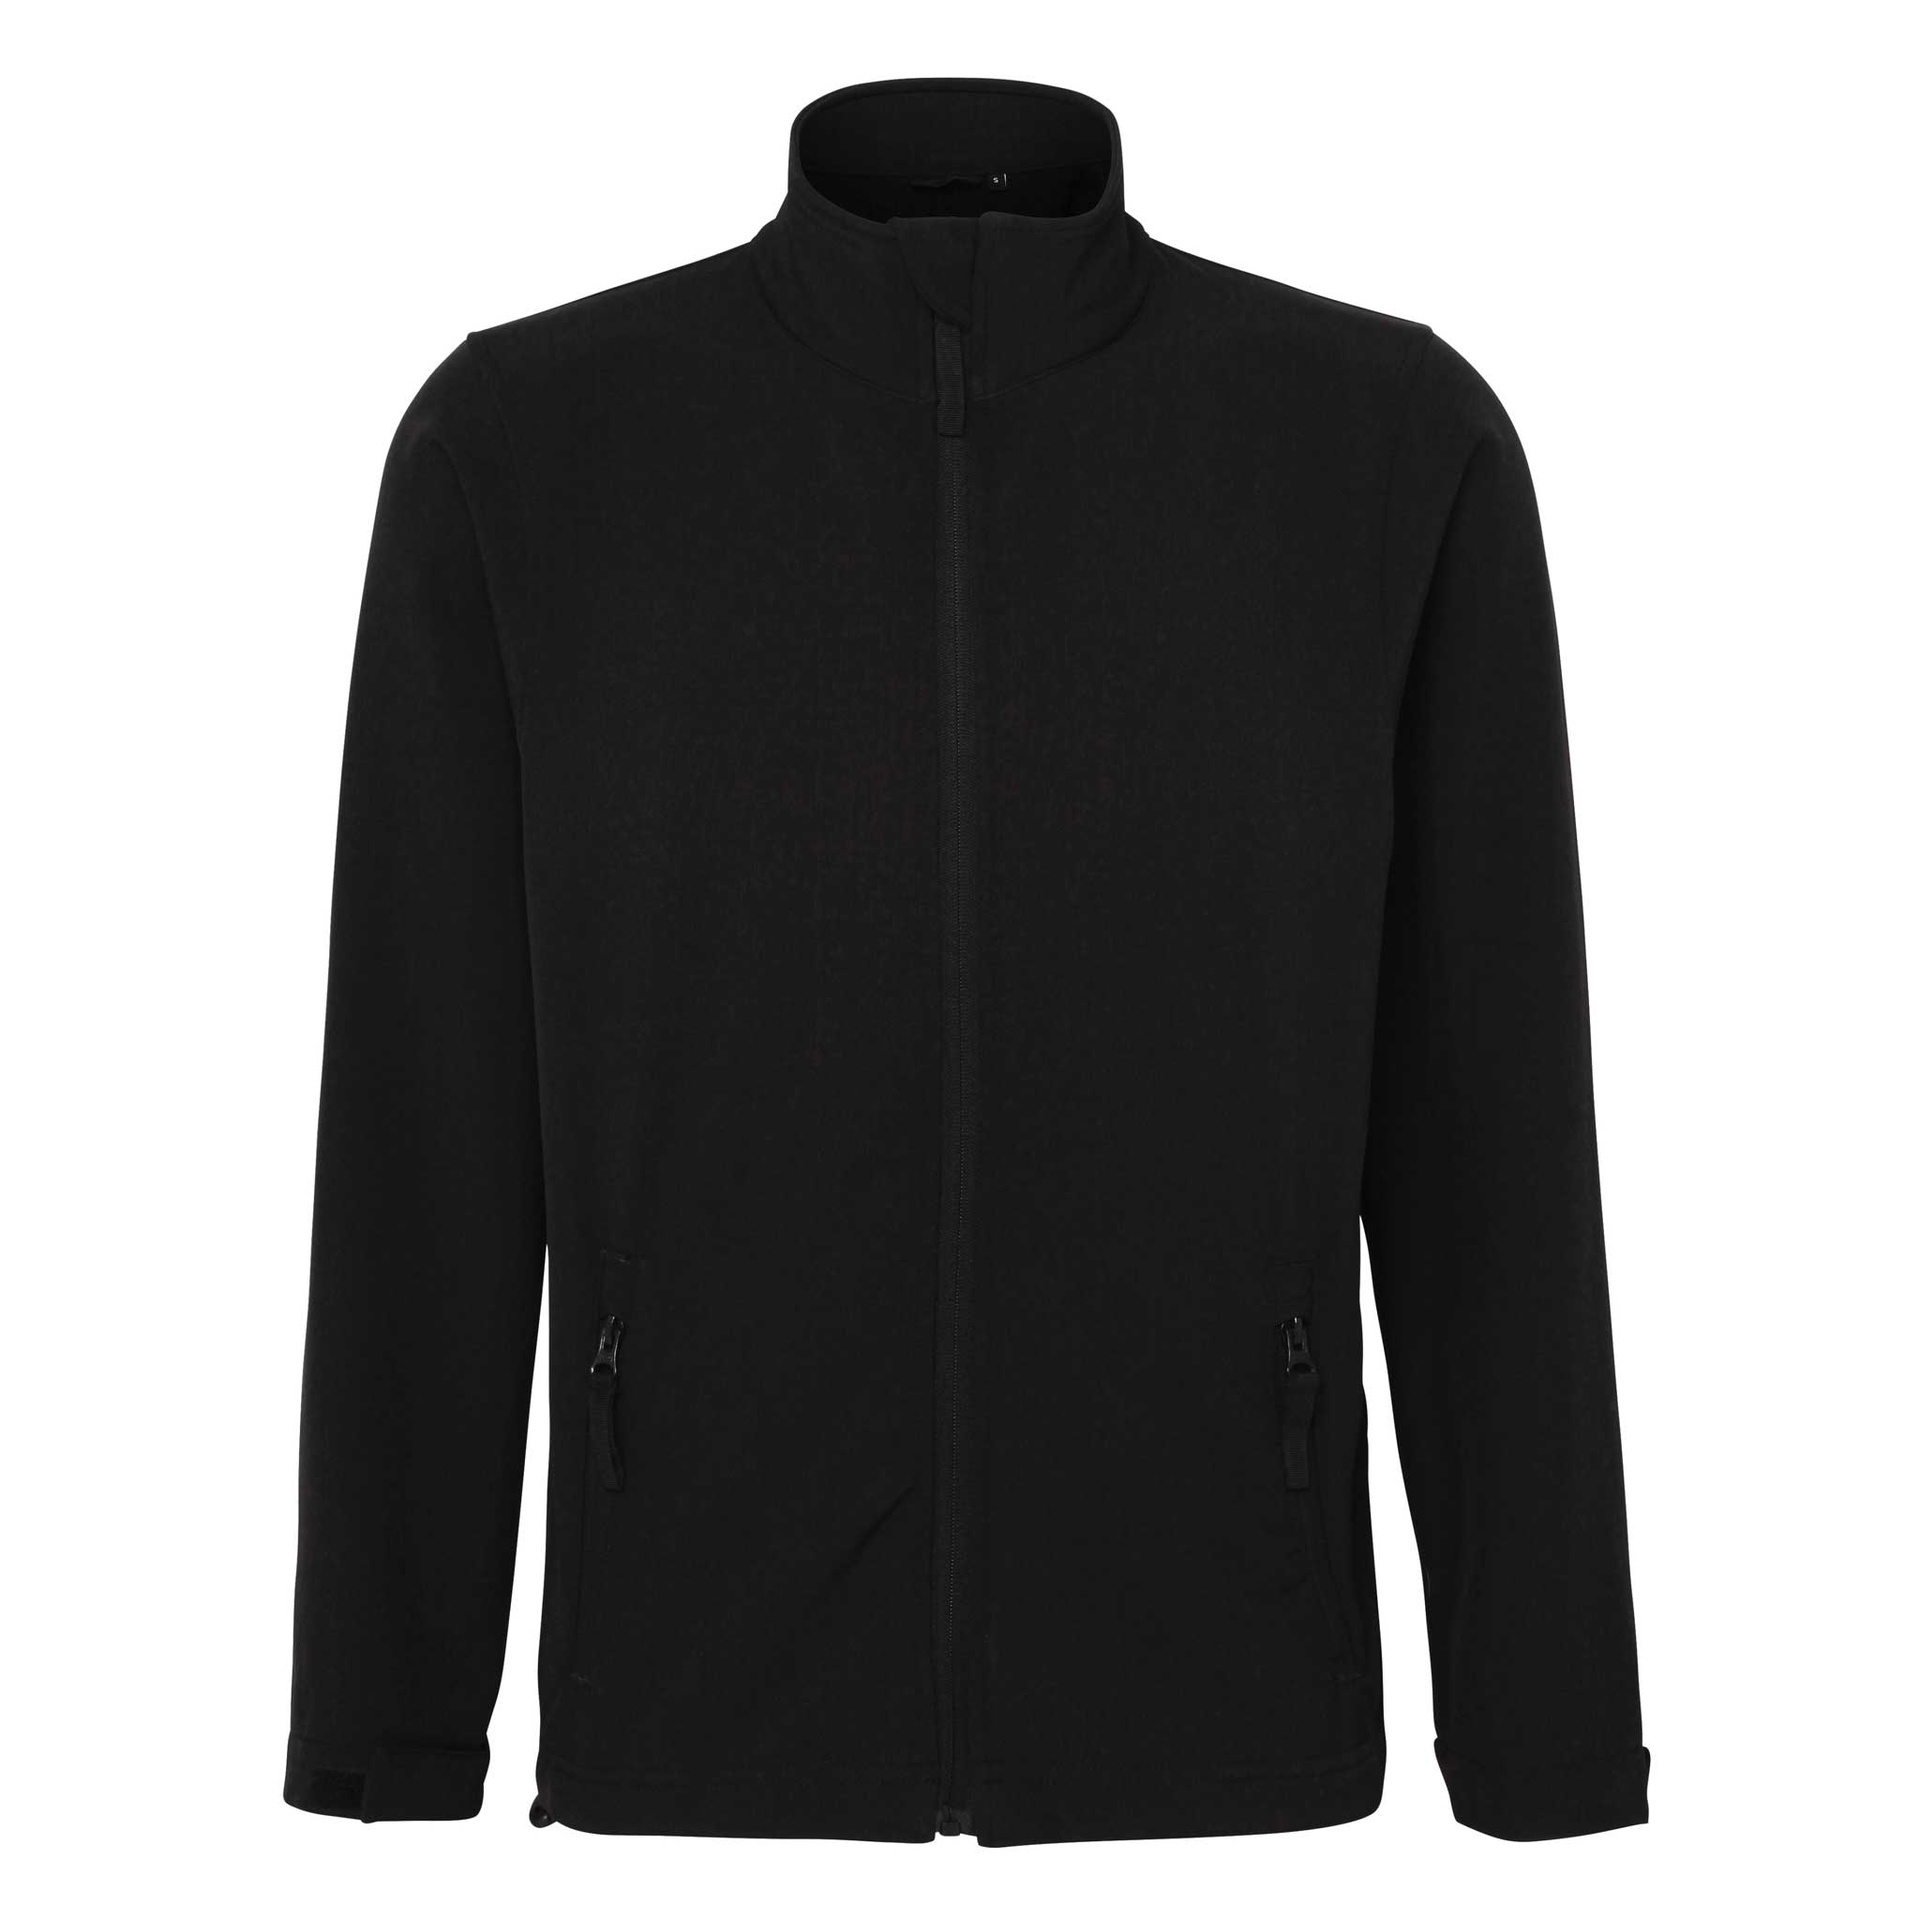 Pro 2 Layer Softshell Jacket